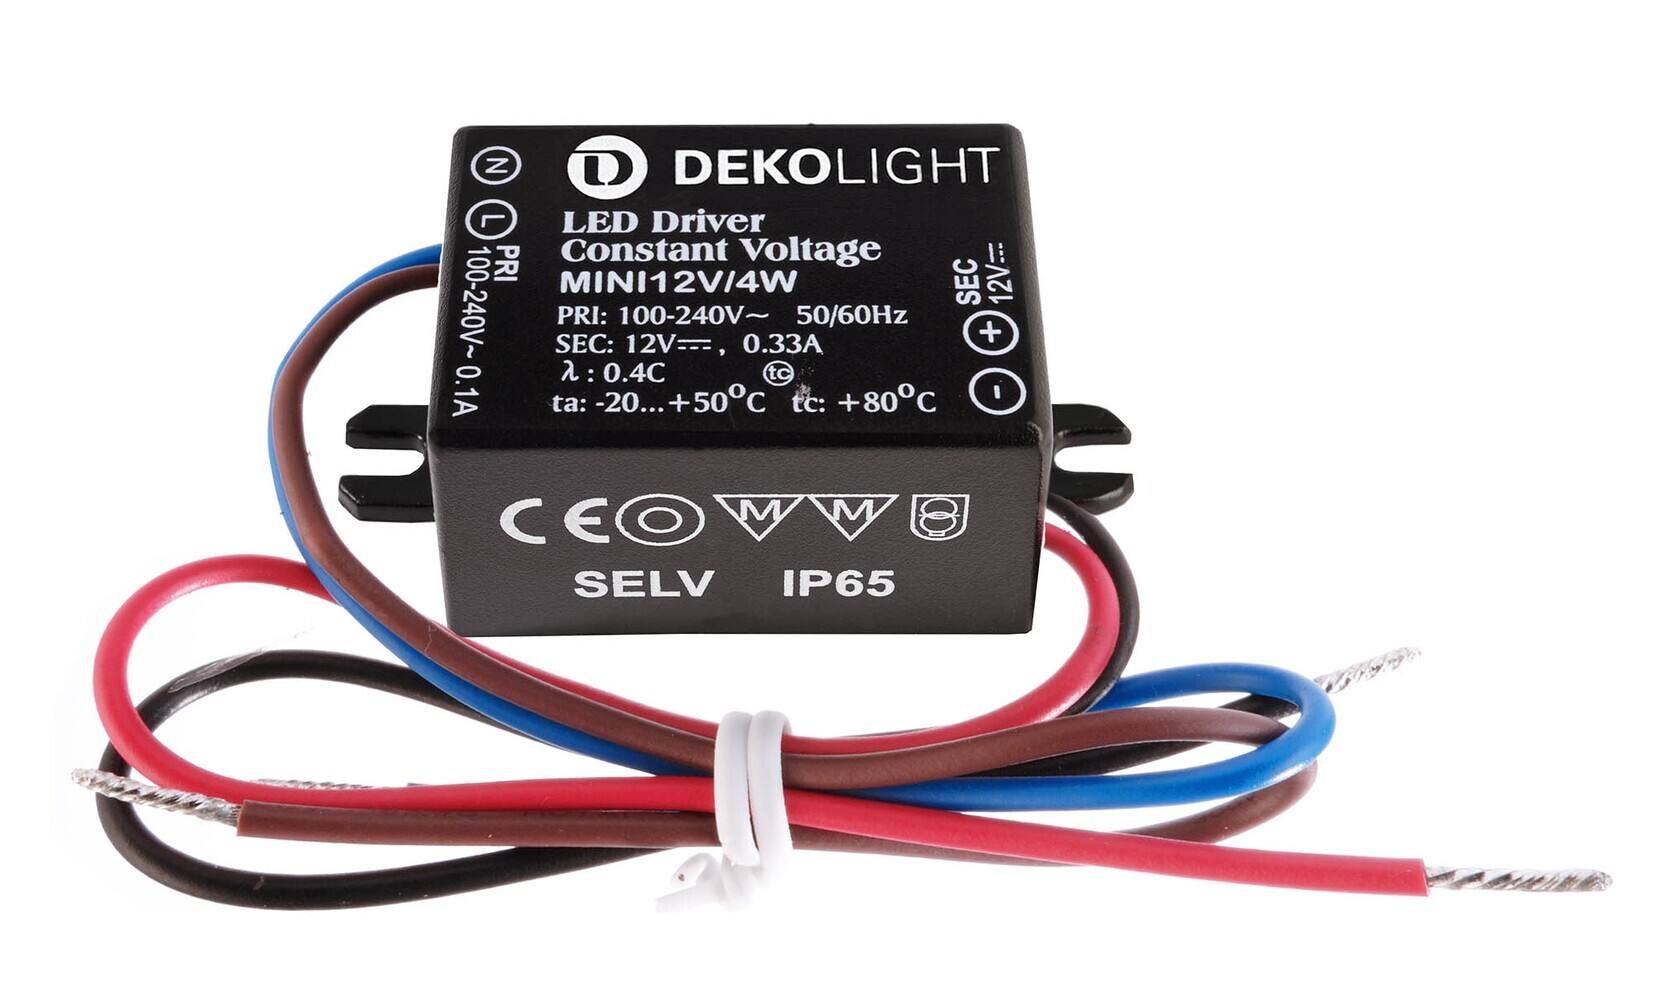 Qualitatives LED Netzteil der Premium-Marke Deko-Light